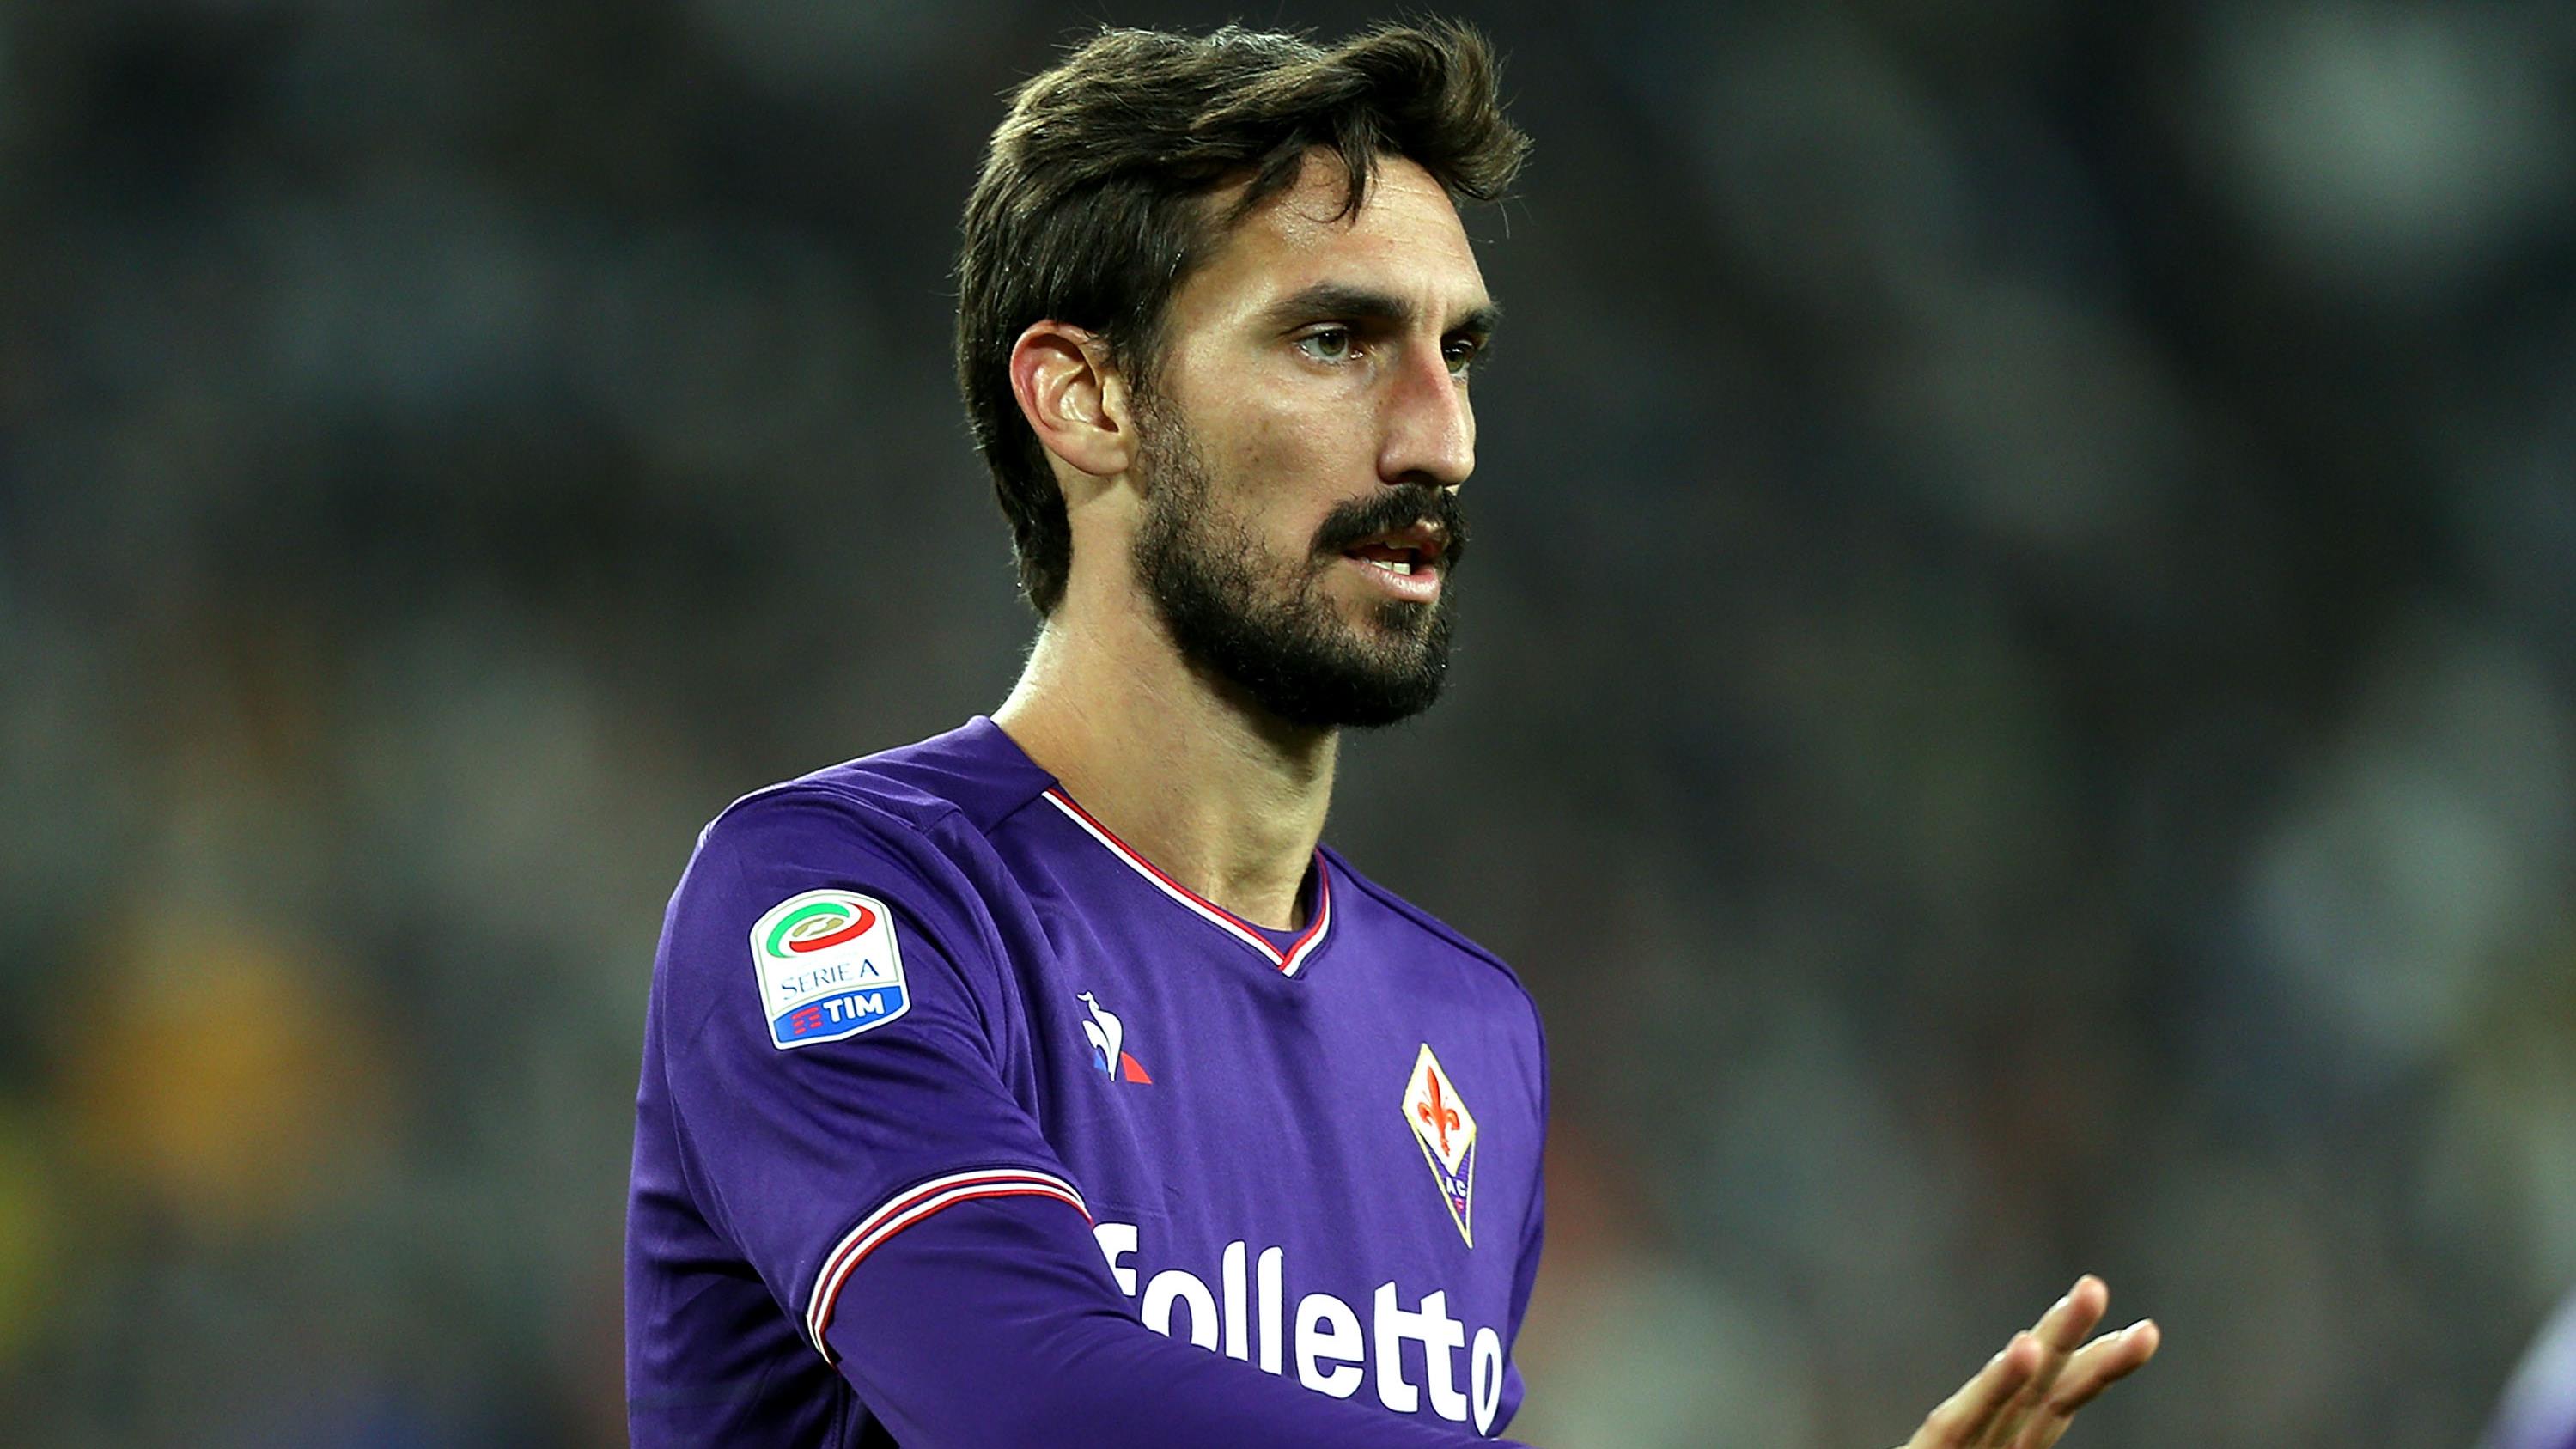 Le capitaine de la Fiorentina, Davide Astori, est mort